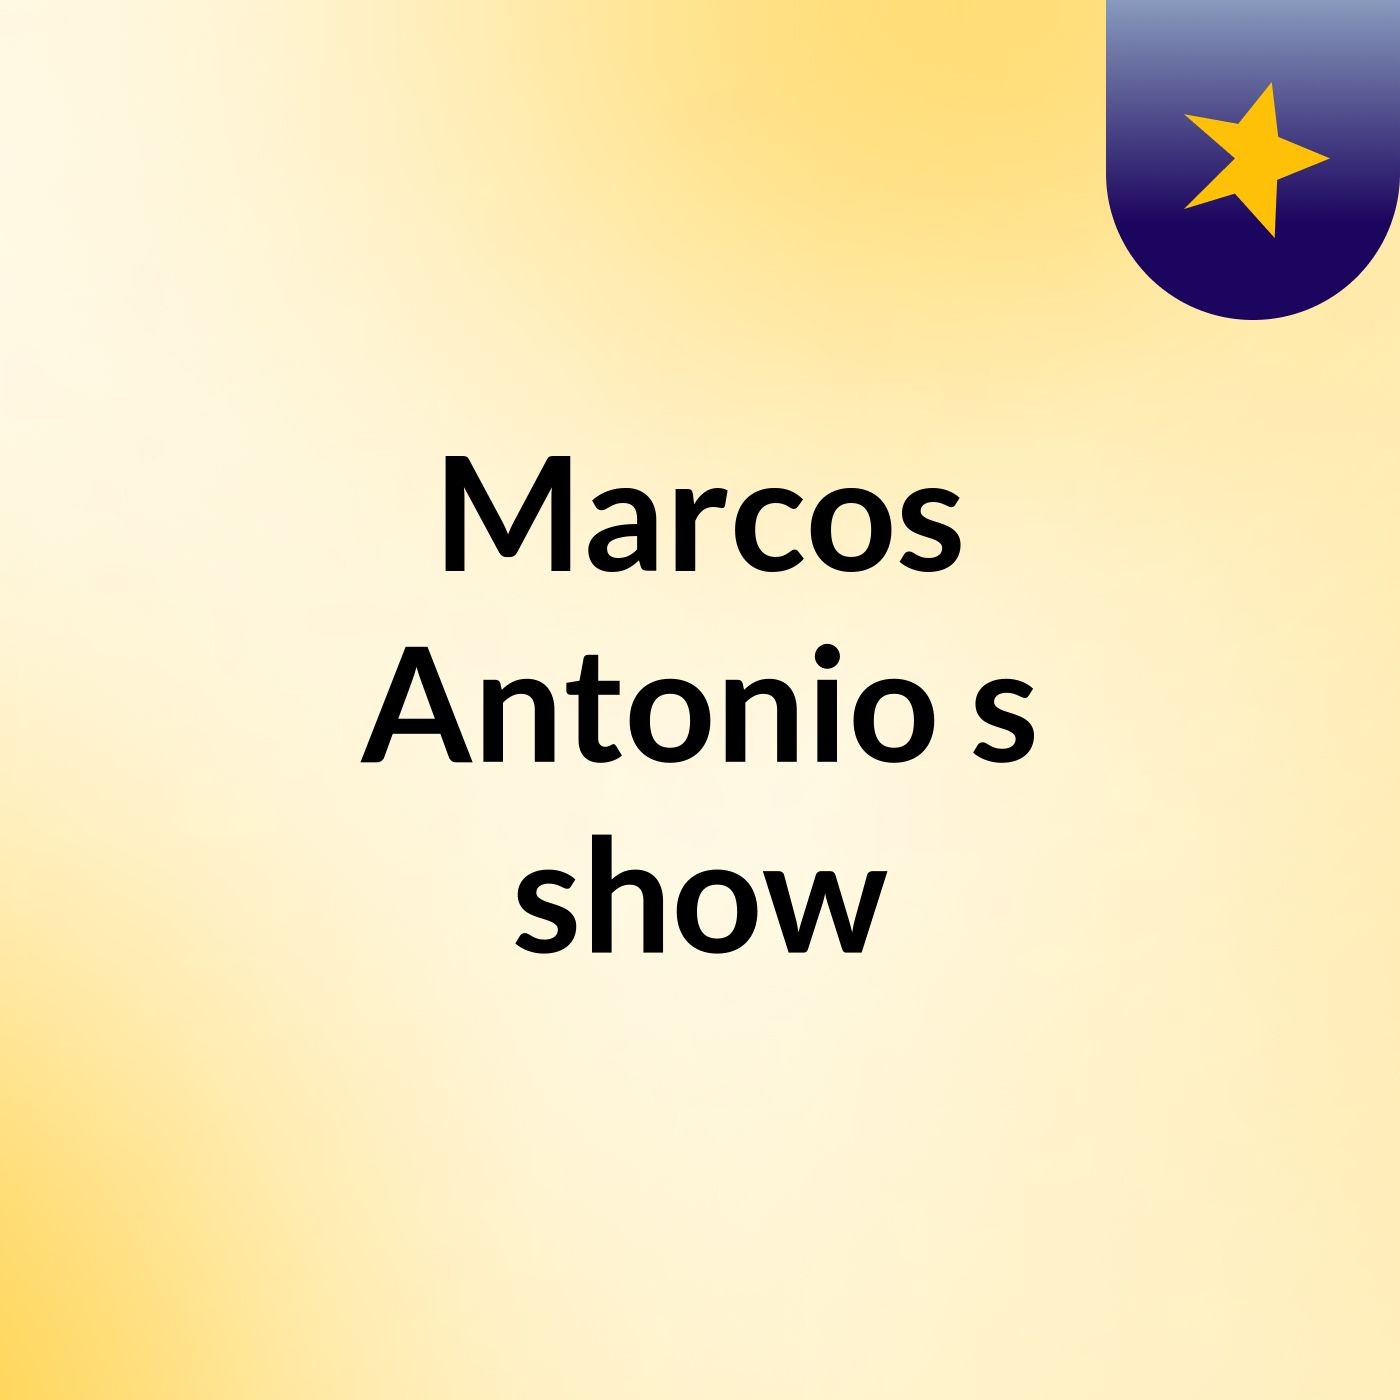 Marcos Antonio's show